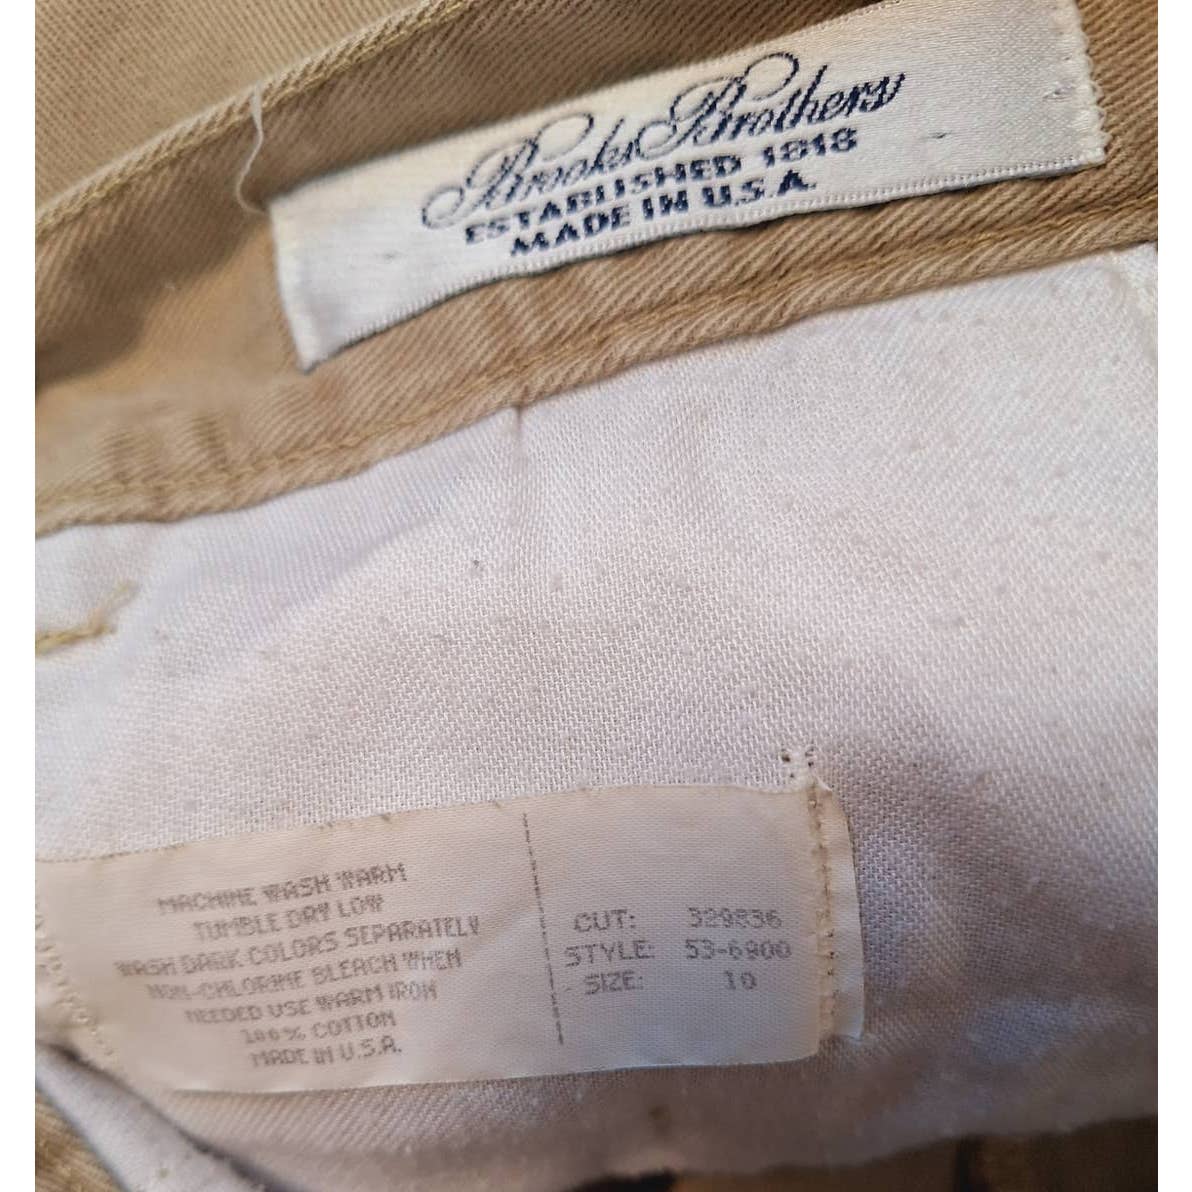 Vintage 80s/90s High Waist Pleated Khaki Pants Women's Size MP 29x28 - themallvintage The Mall Vintage